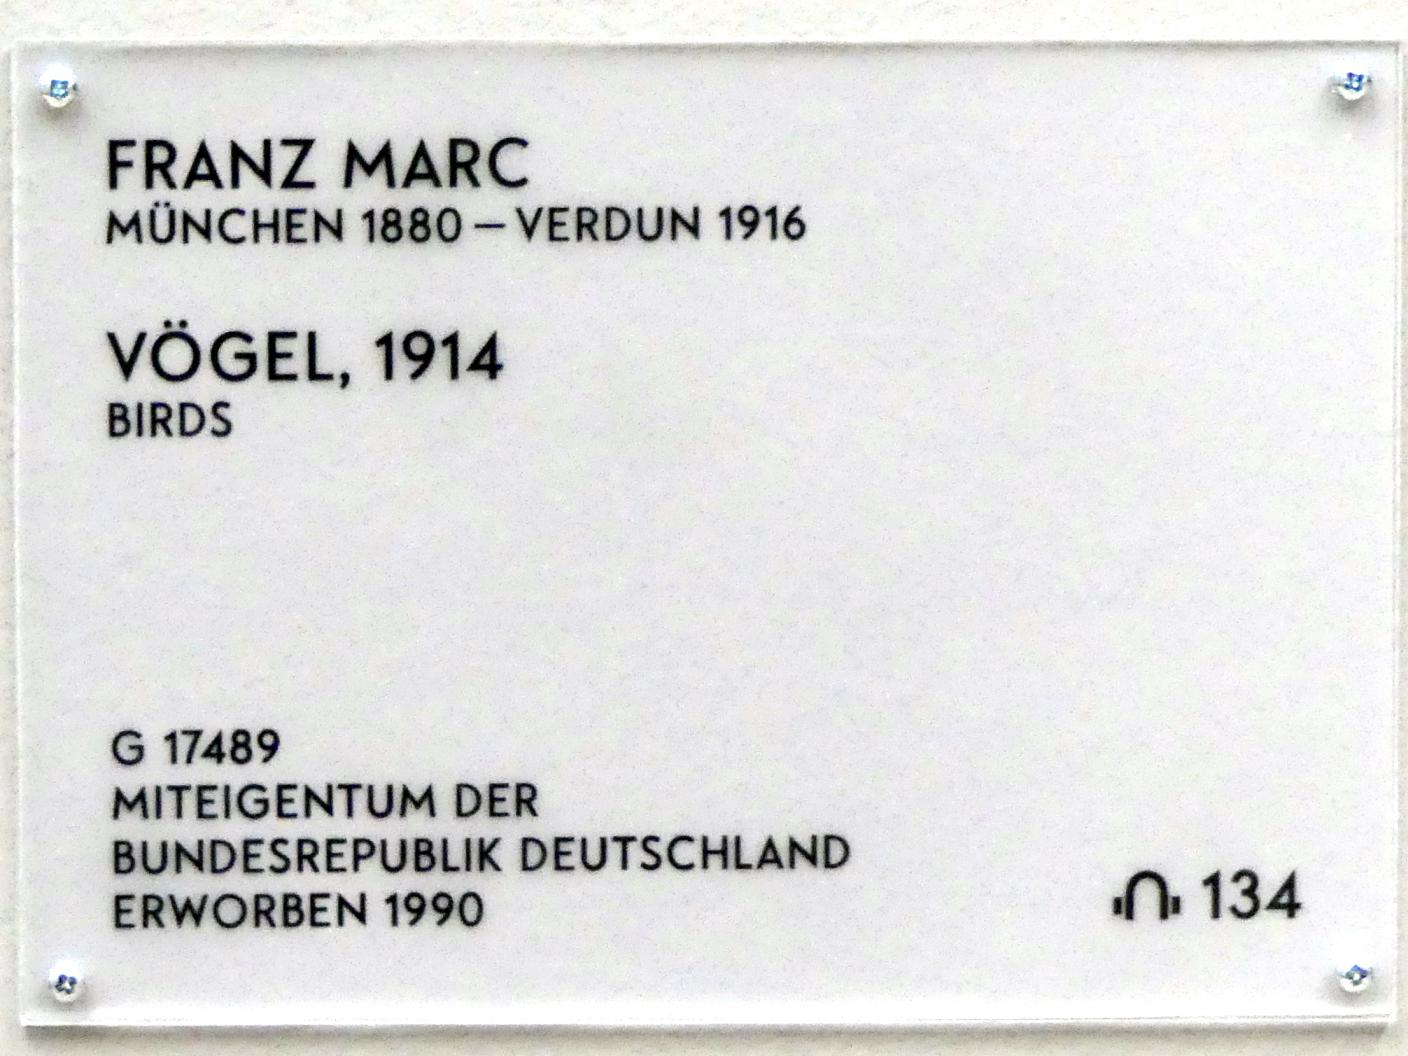 Franz Marc (1904–1914), Vögel, München, Lenbachhaus, Saal 29, 1914, Bild 2/2